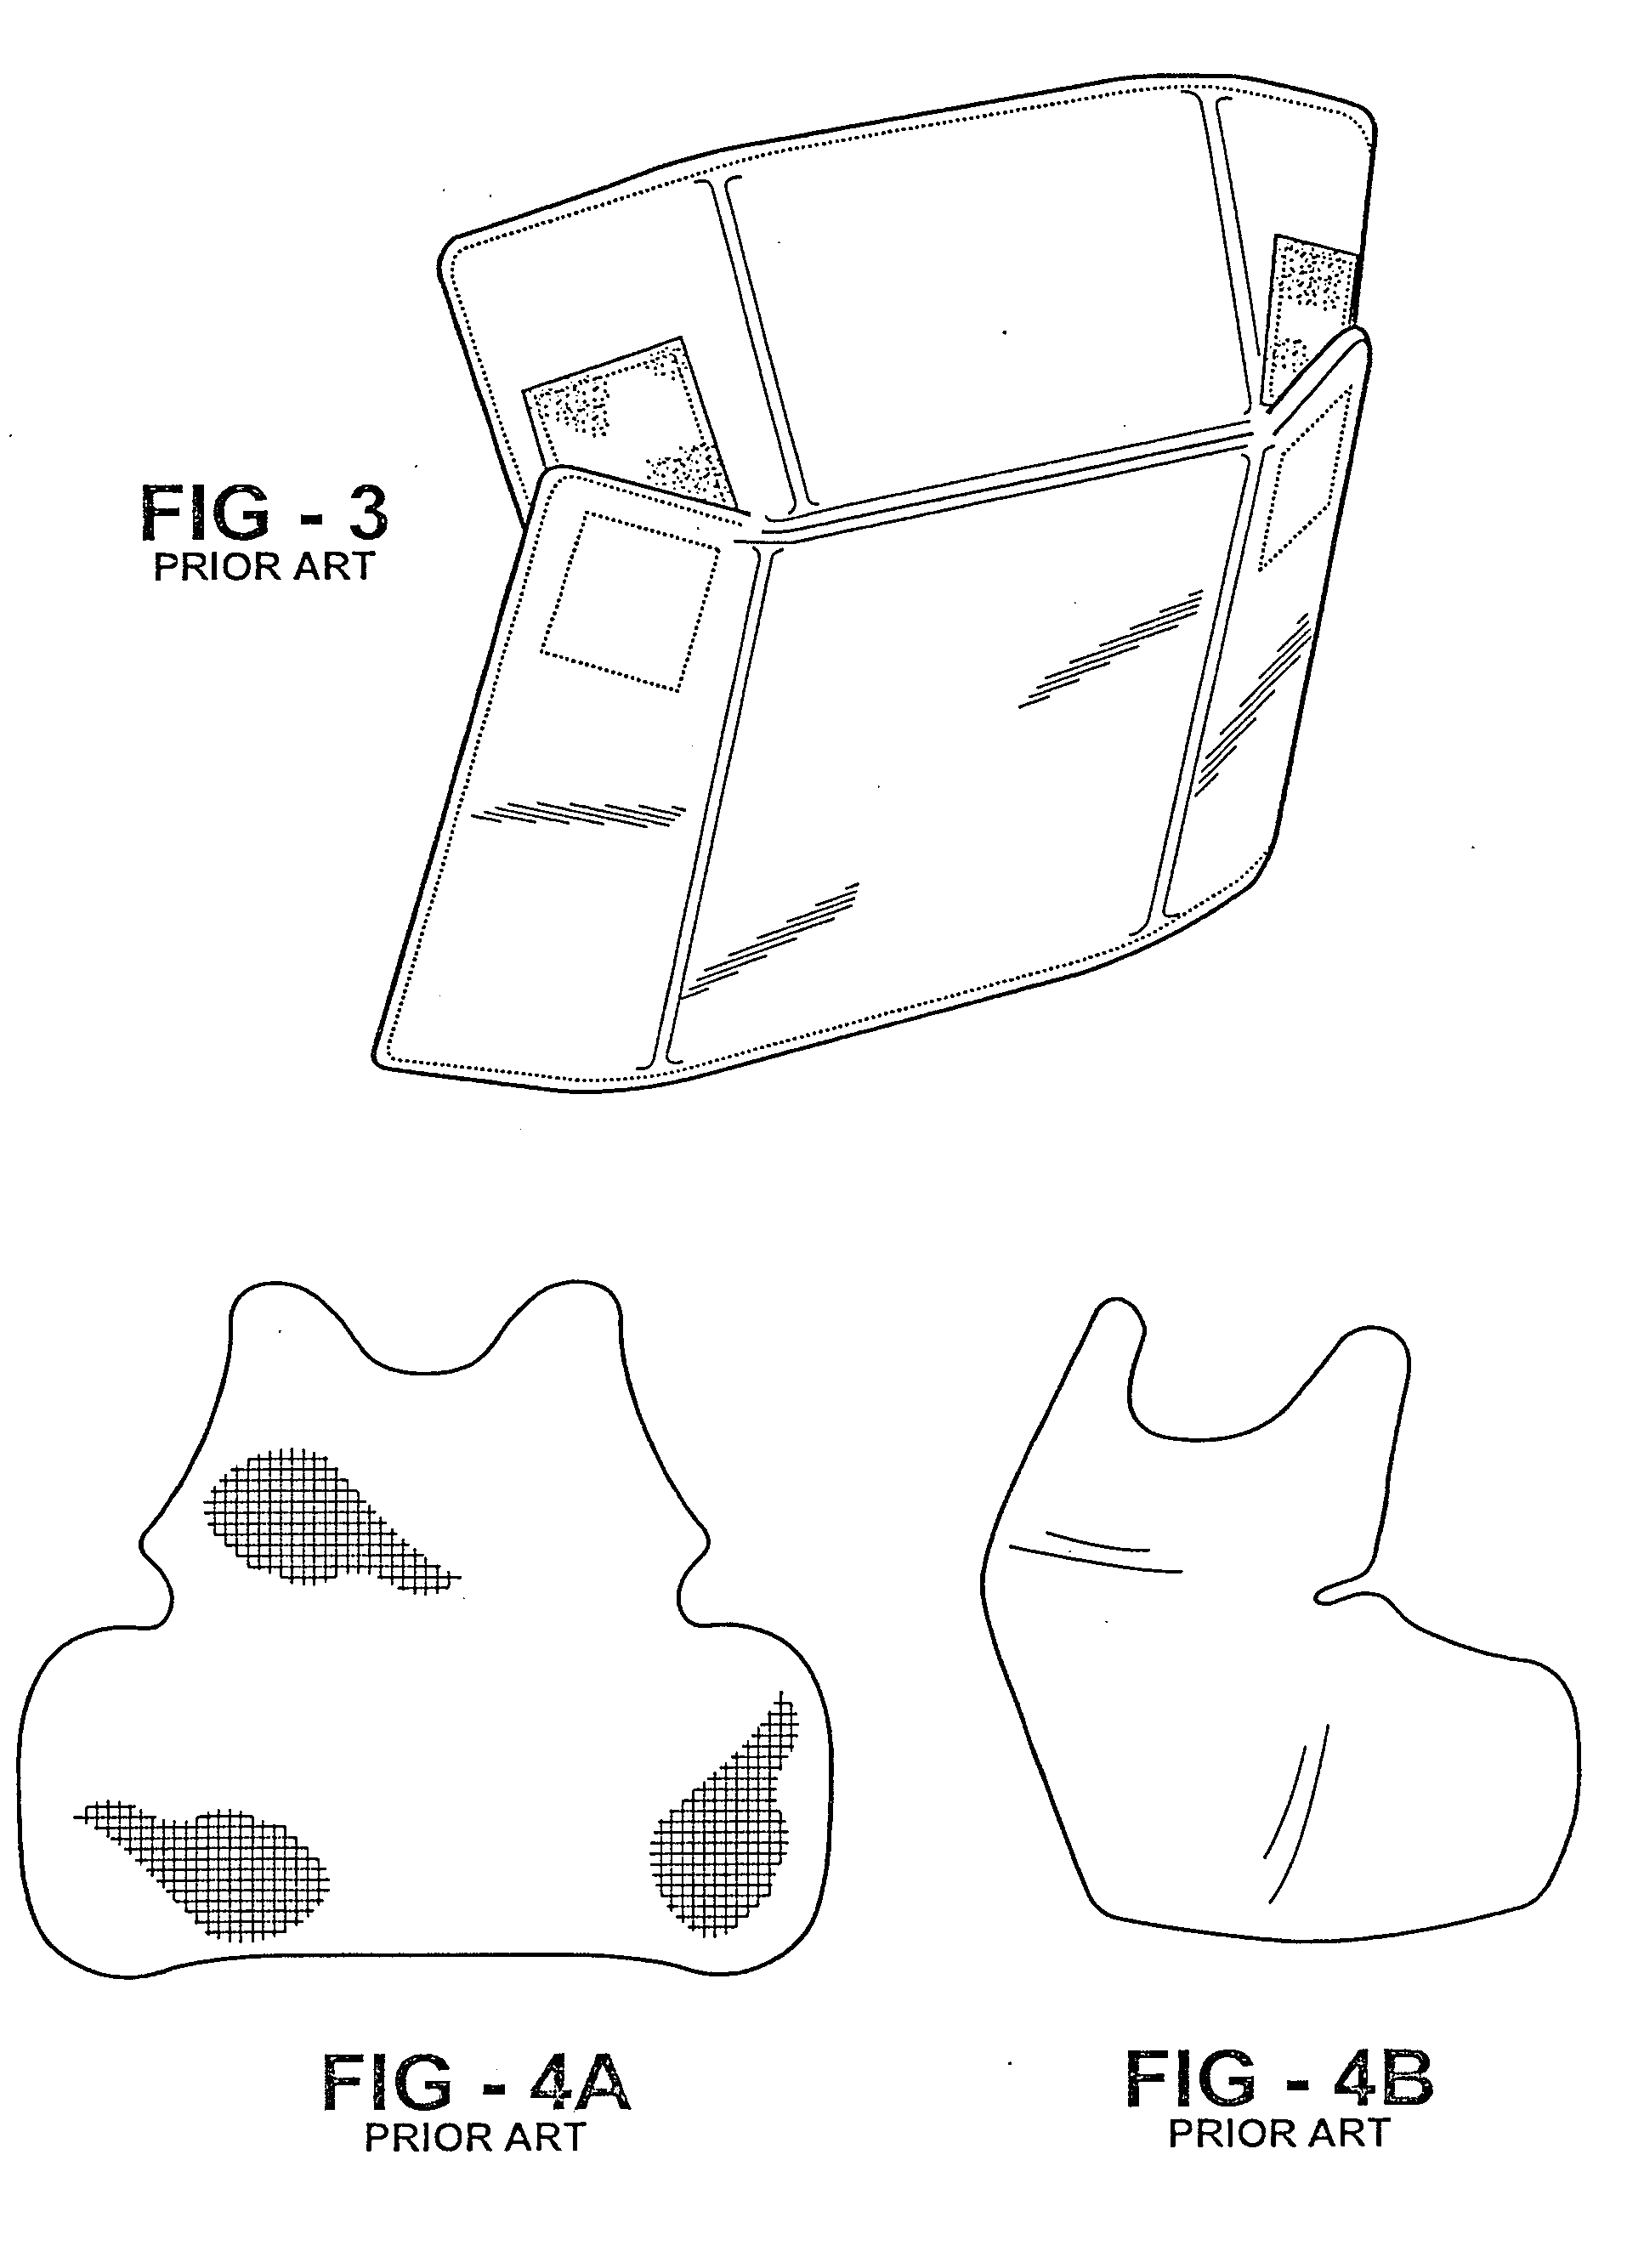 Molded Torso-conforming body armor including method of producing same